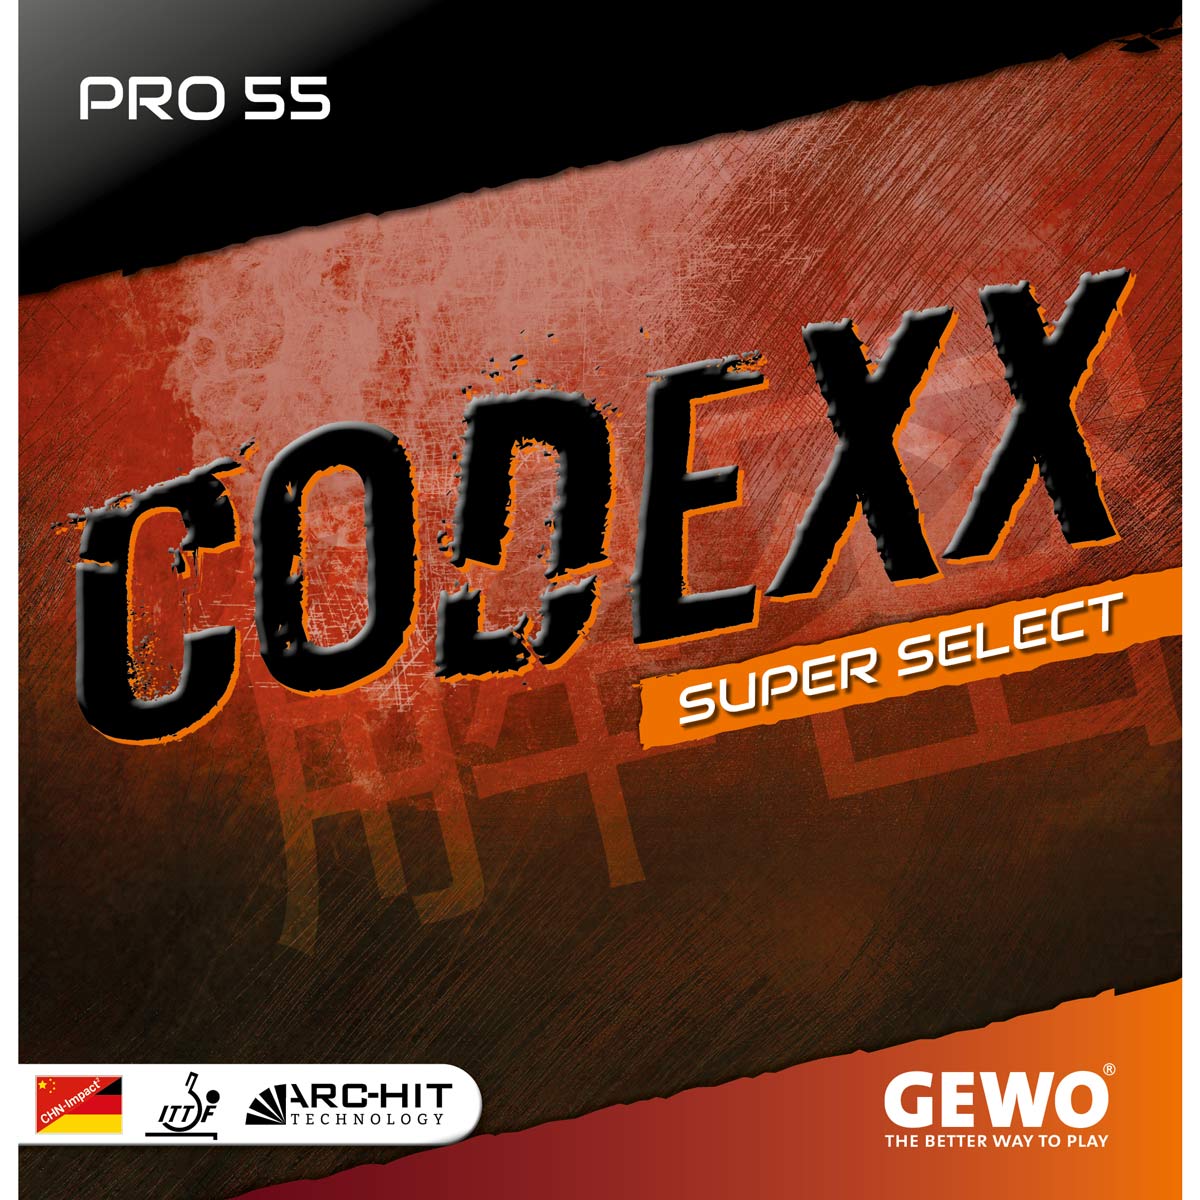 GEWO Rubber Codexx Pro 55 SuperSelect